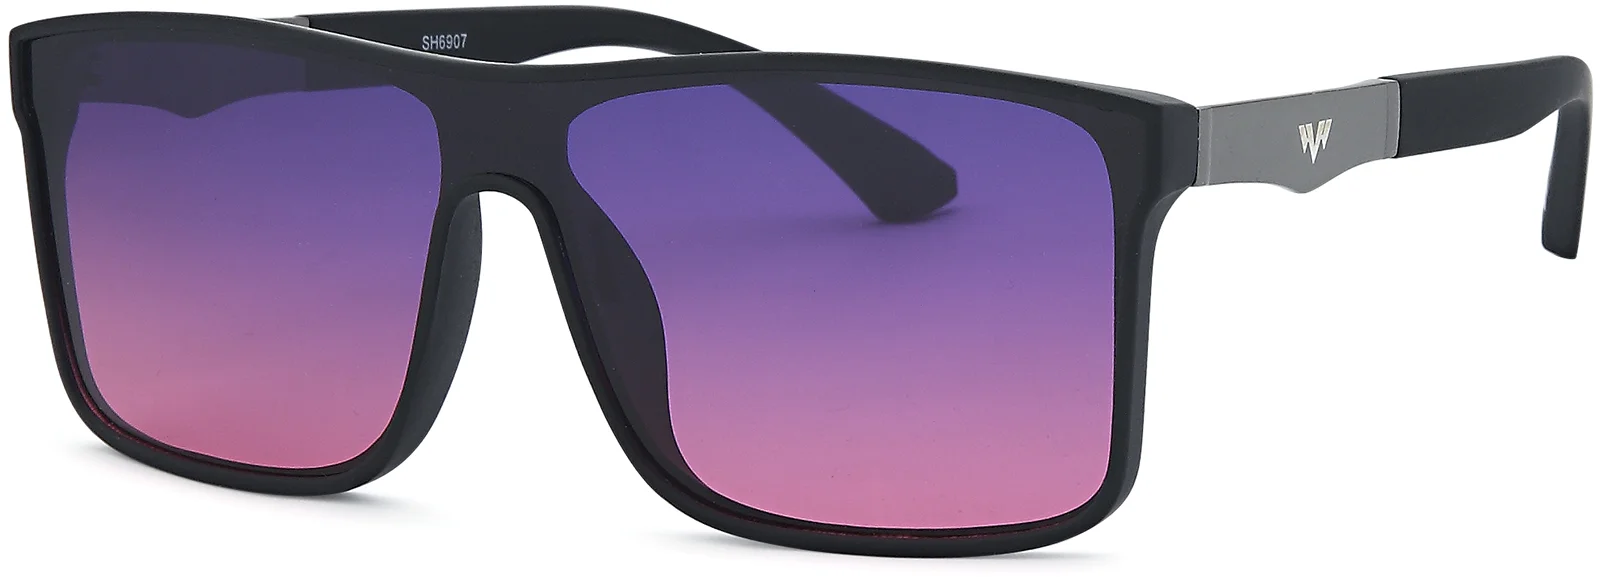 SH6907 - Square Wholesale Sunglasses ⋆ West Coast Sunglasses Inc.